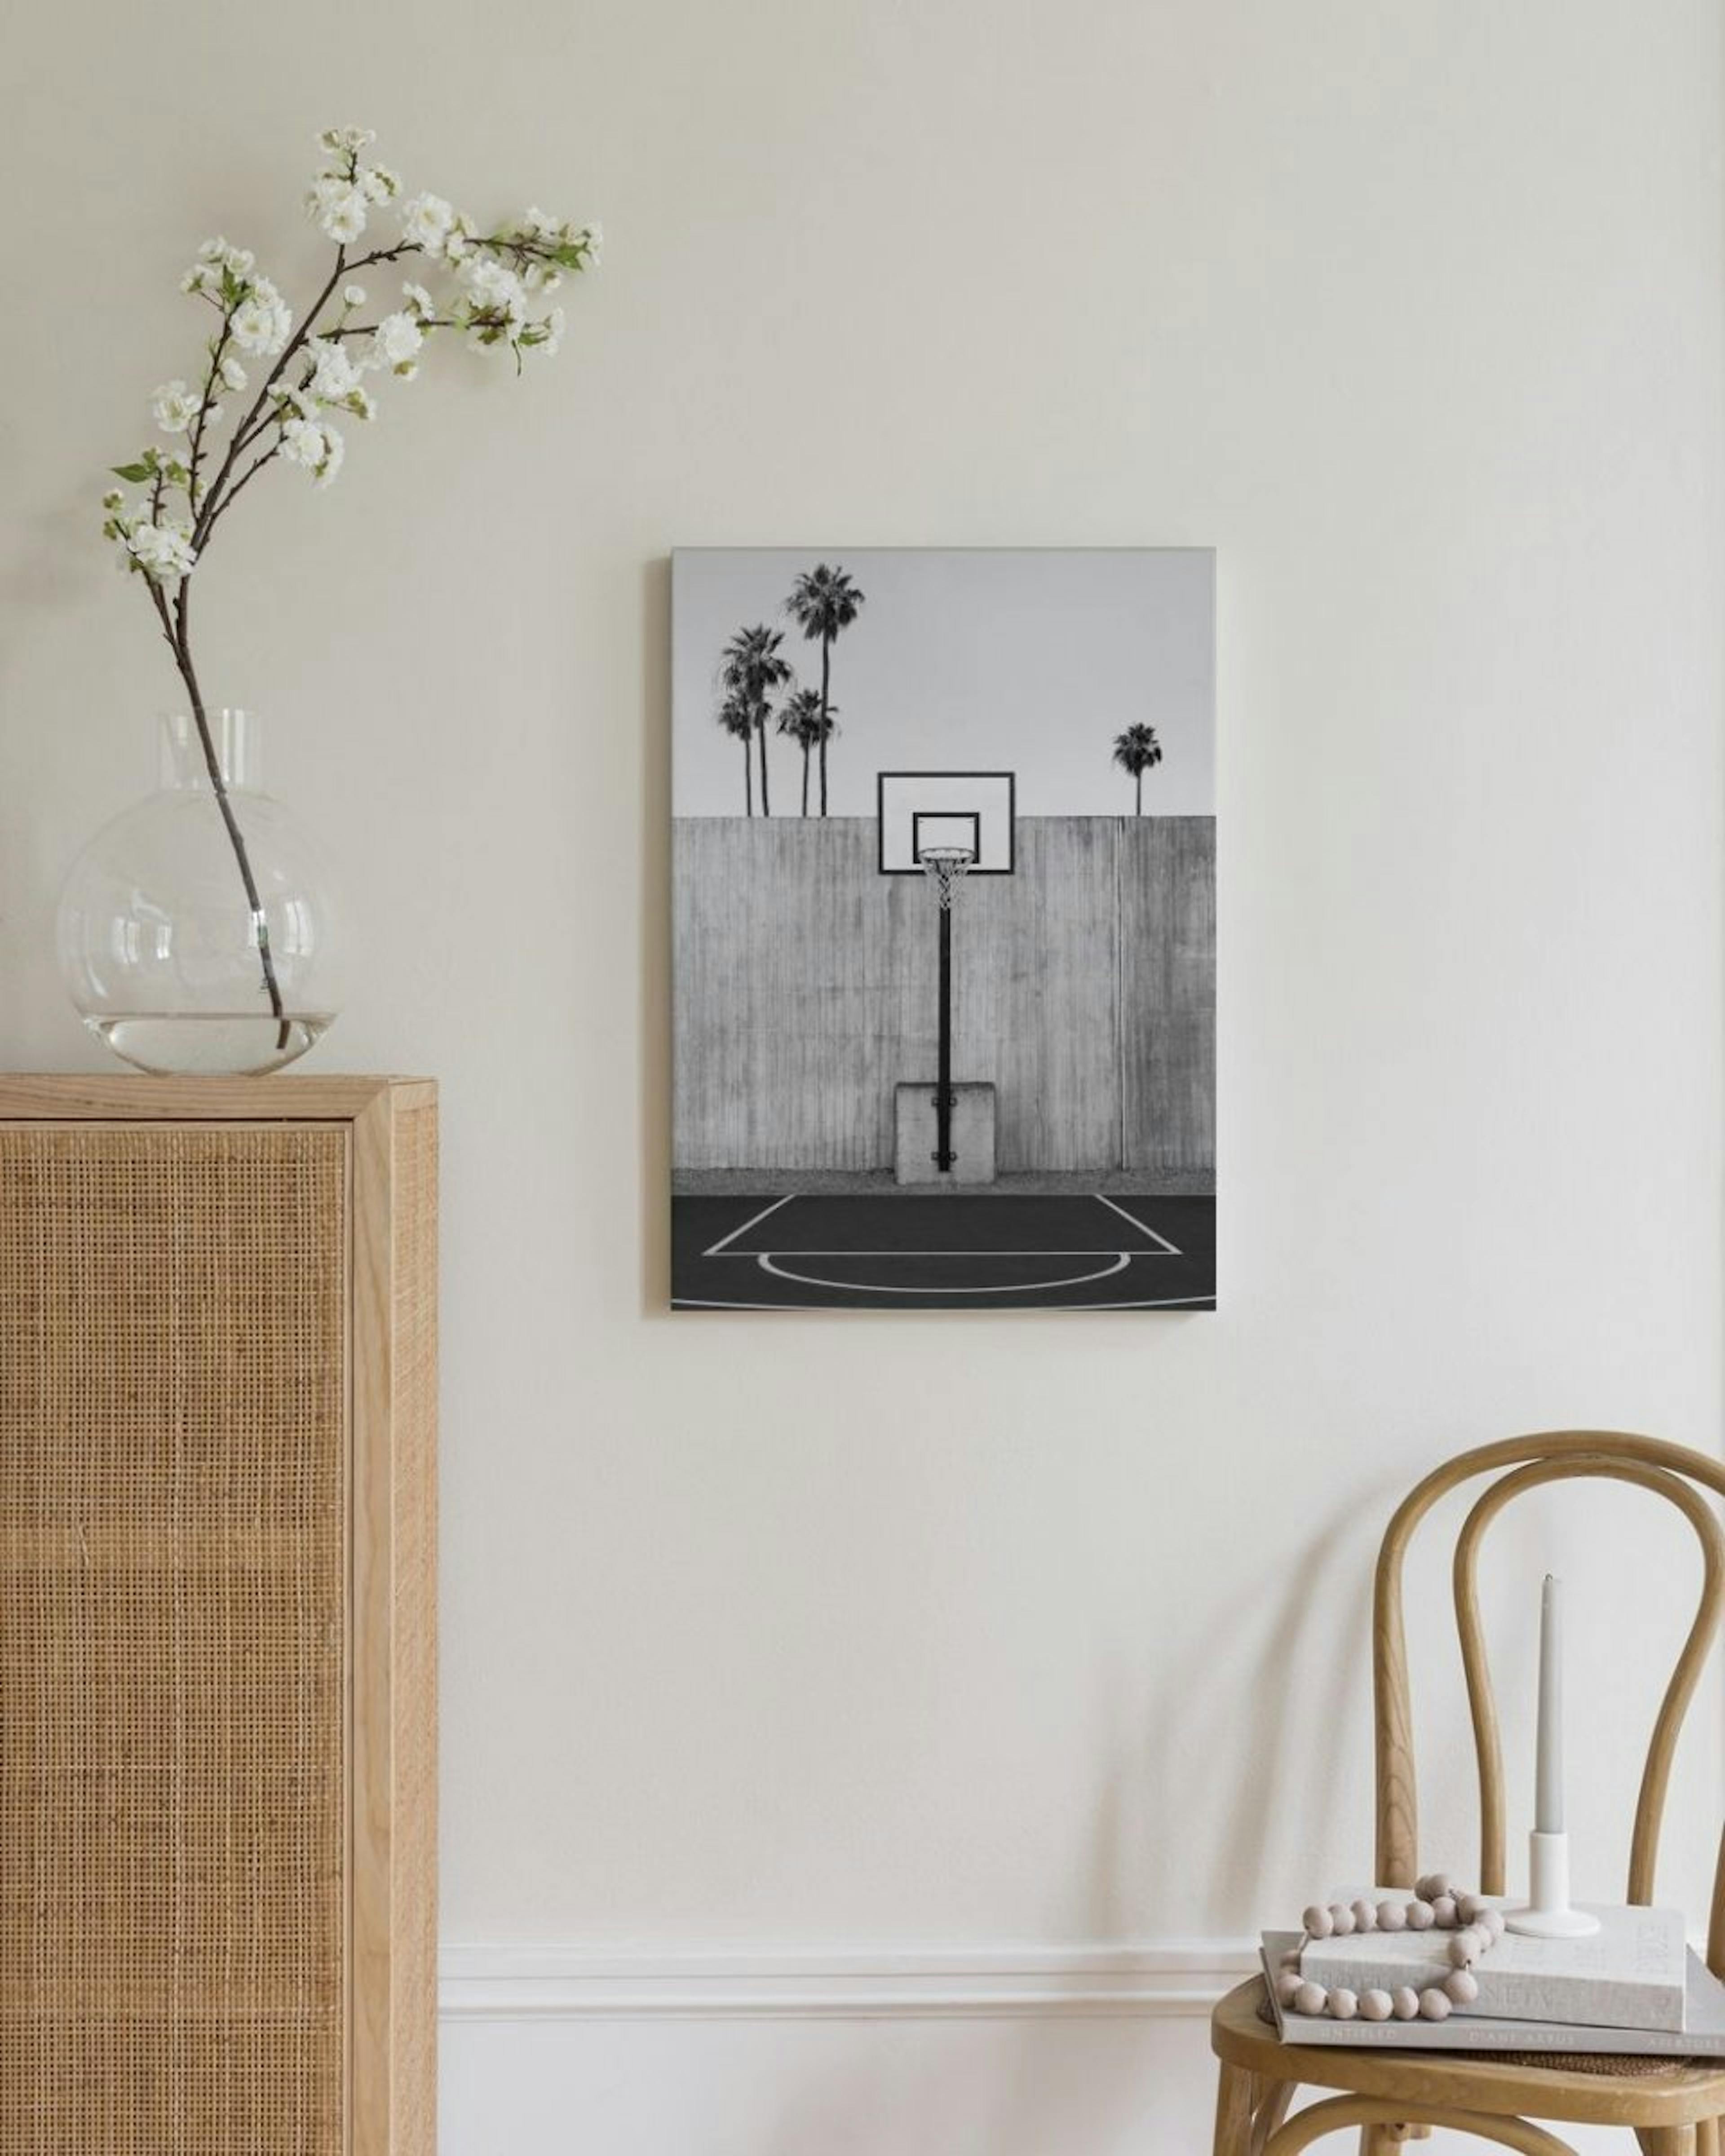 California Basketball Court Lienzo